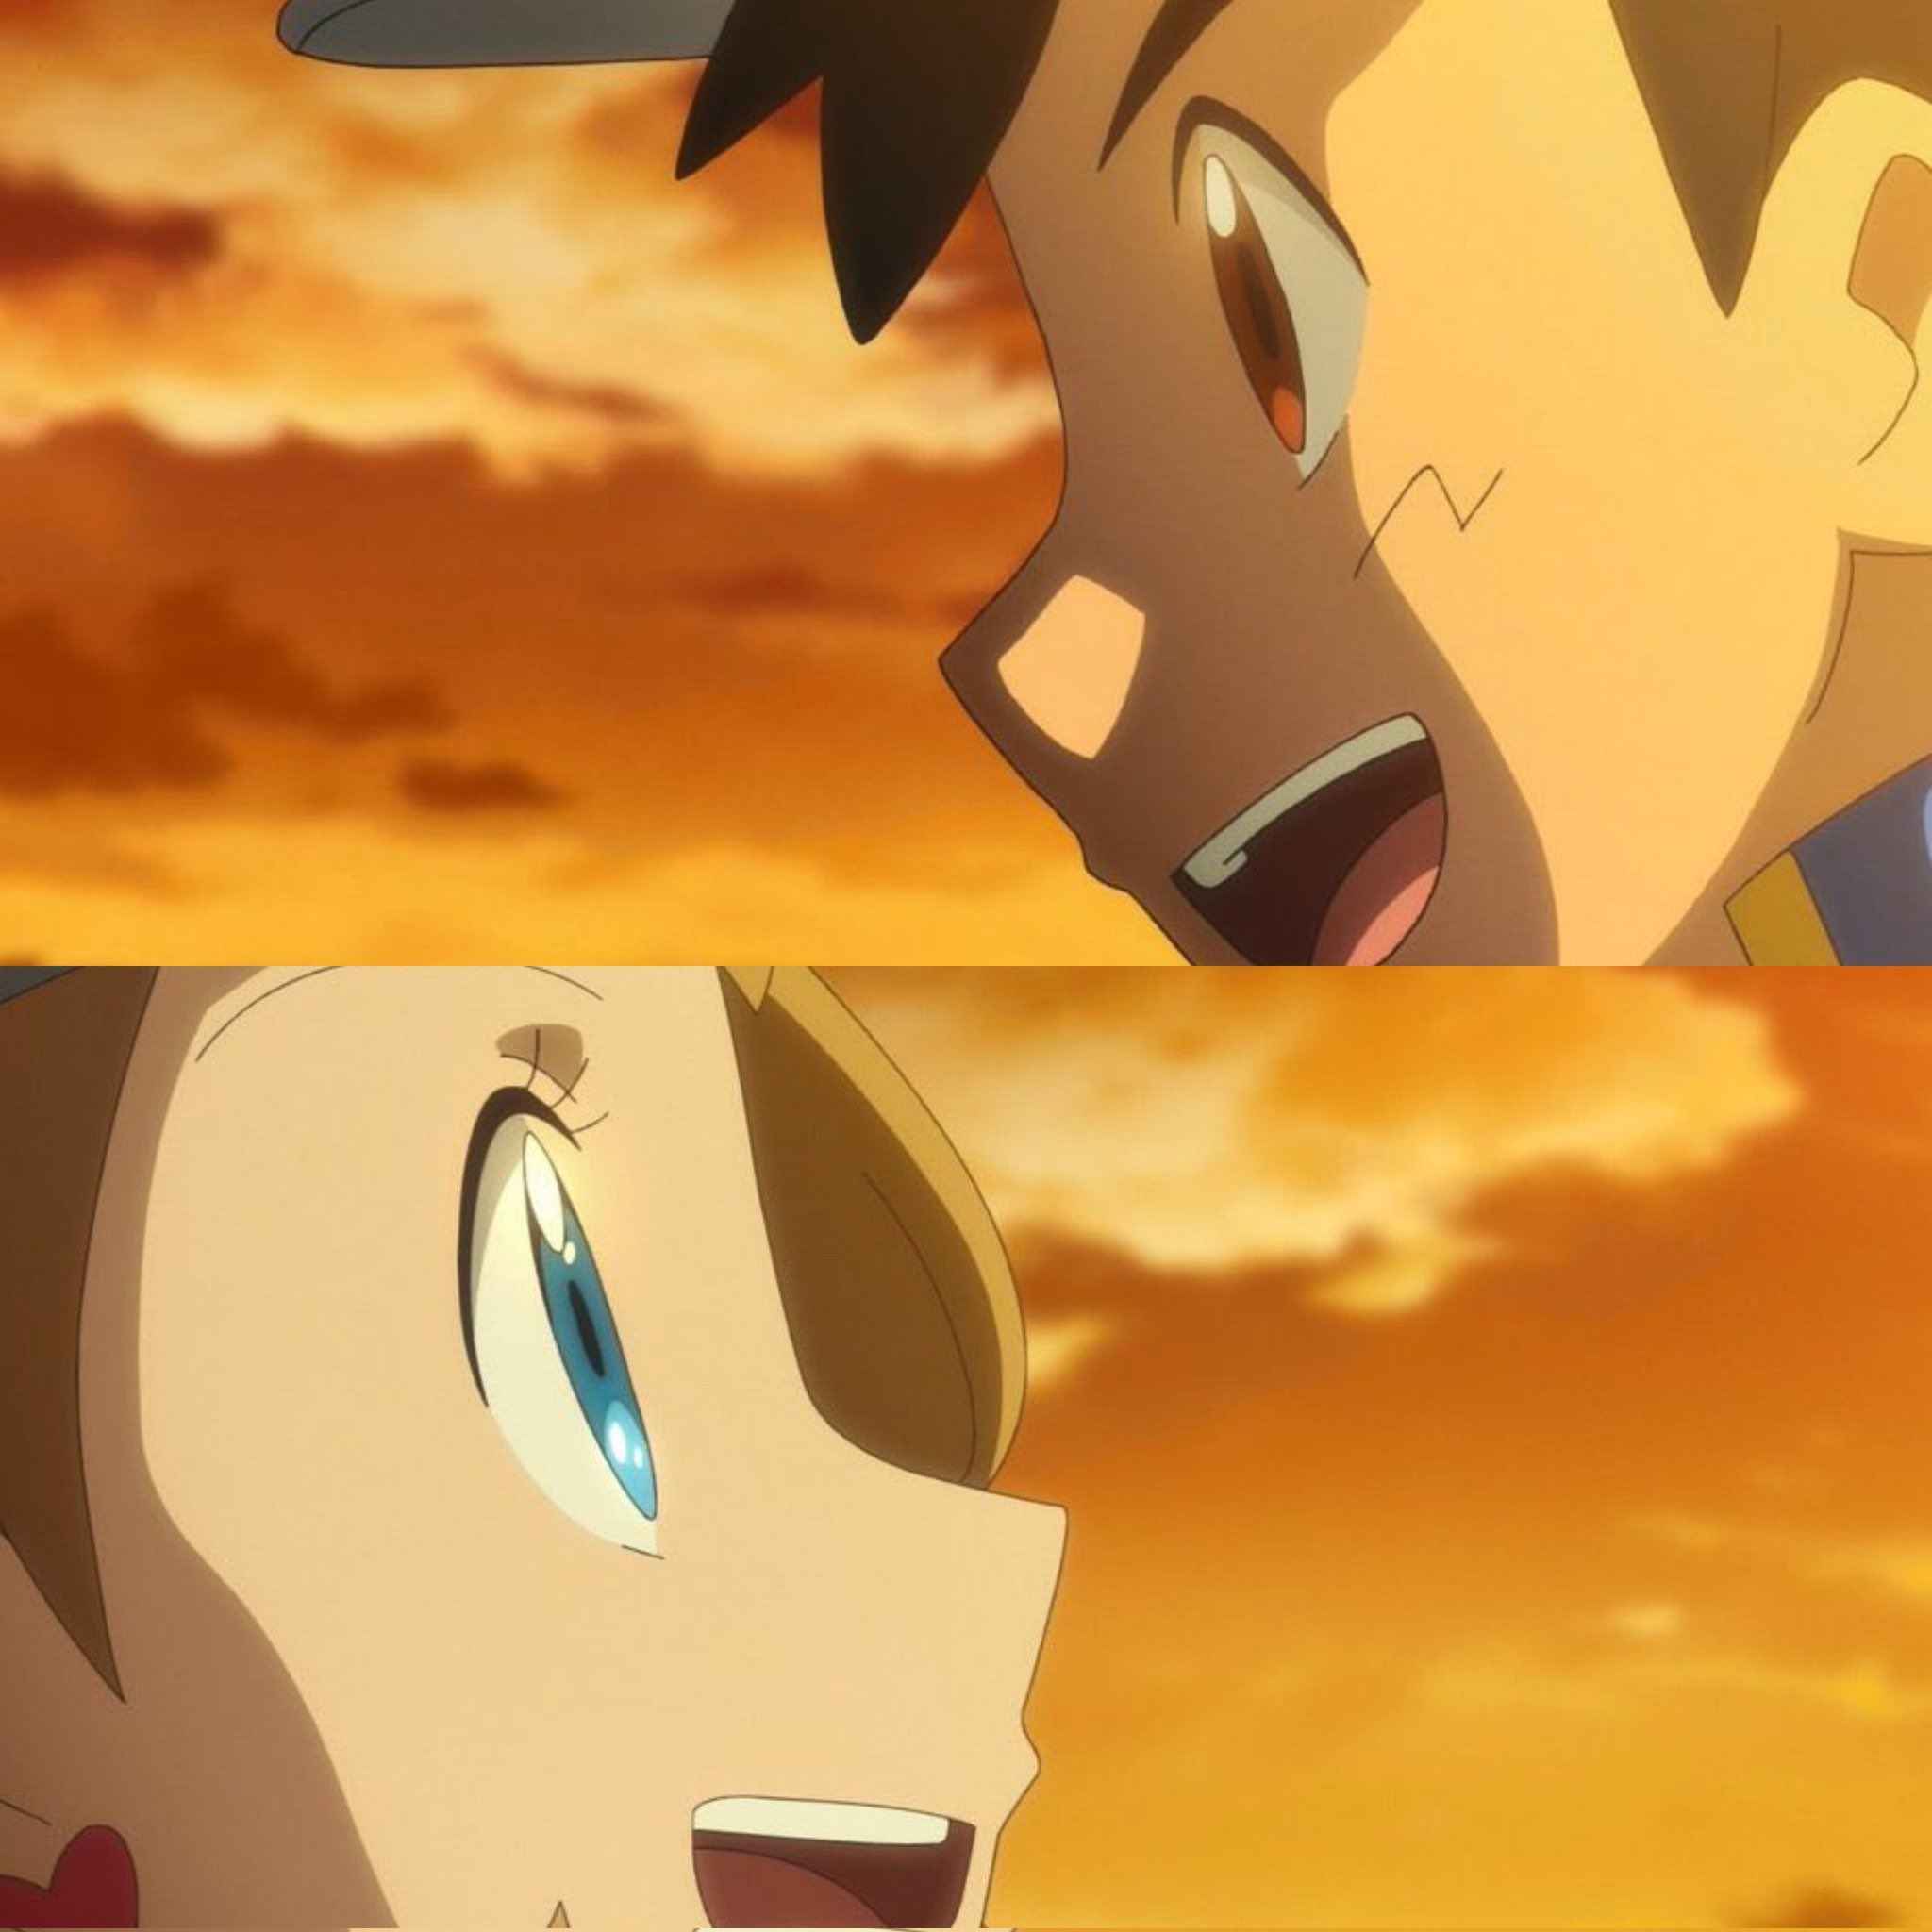 ◓ Anime Pokémon Journeys (Pokémon Jornadas Supremas) • Episódio 105: Eevee  e Sylveon! Encontros e Reencontros!!